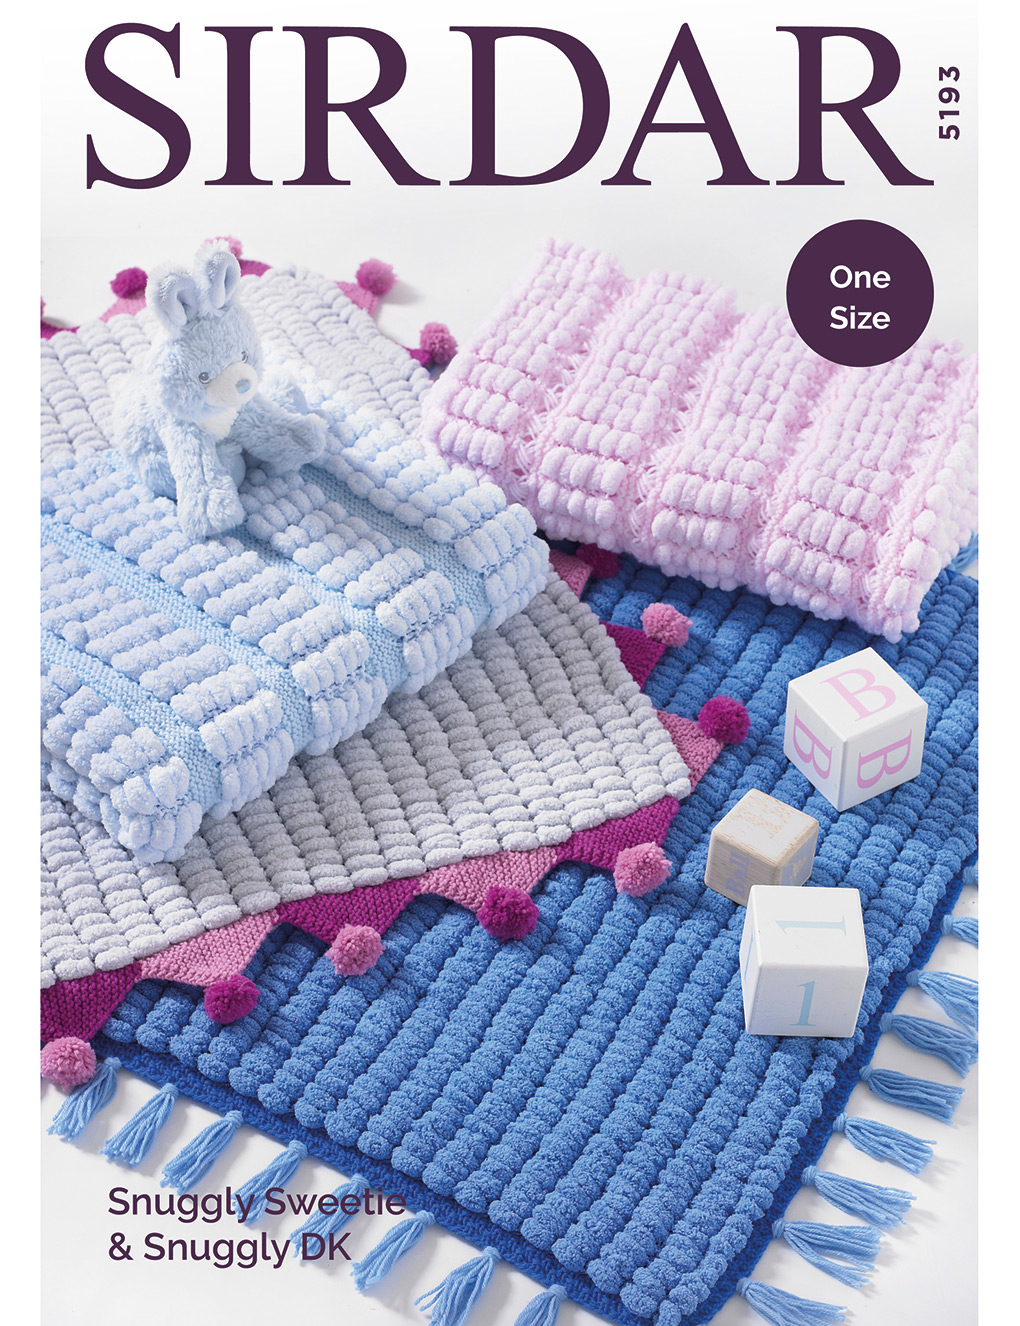 Sirdar Snuggly Knitting Patterns Sirdar Knitting Pattern 5193 Ba Blankets